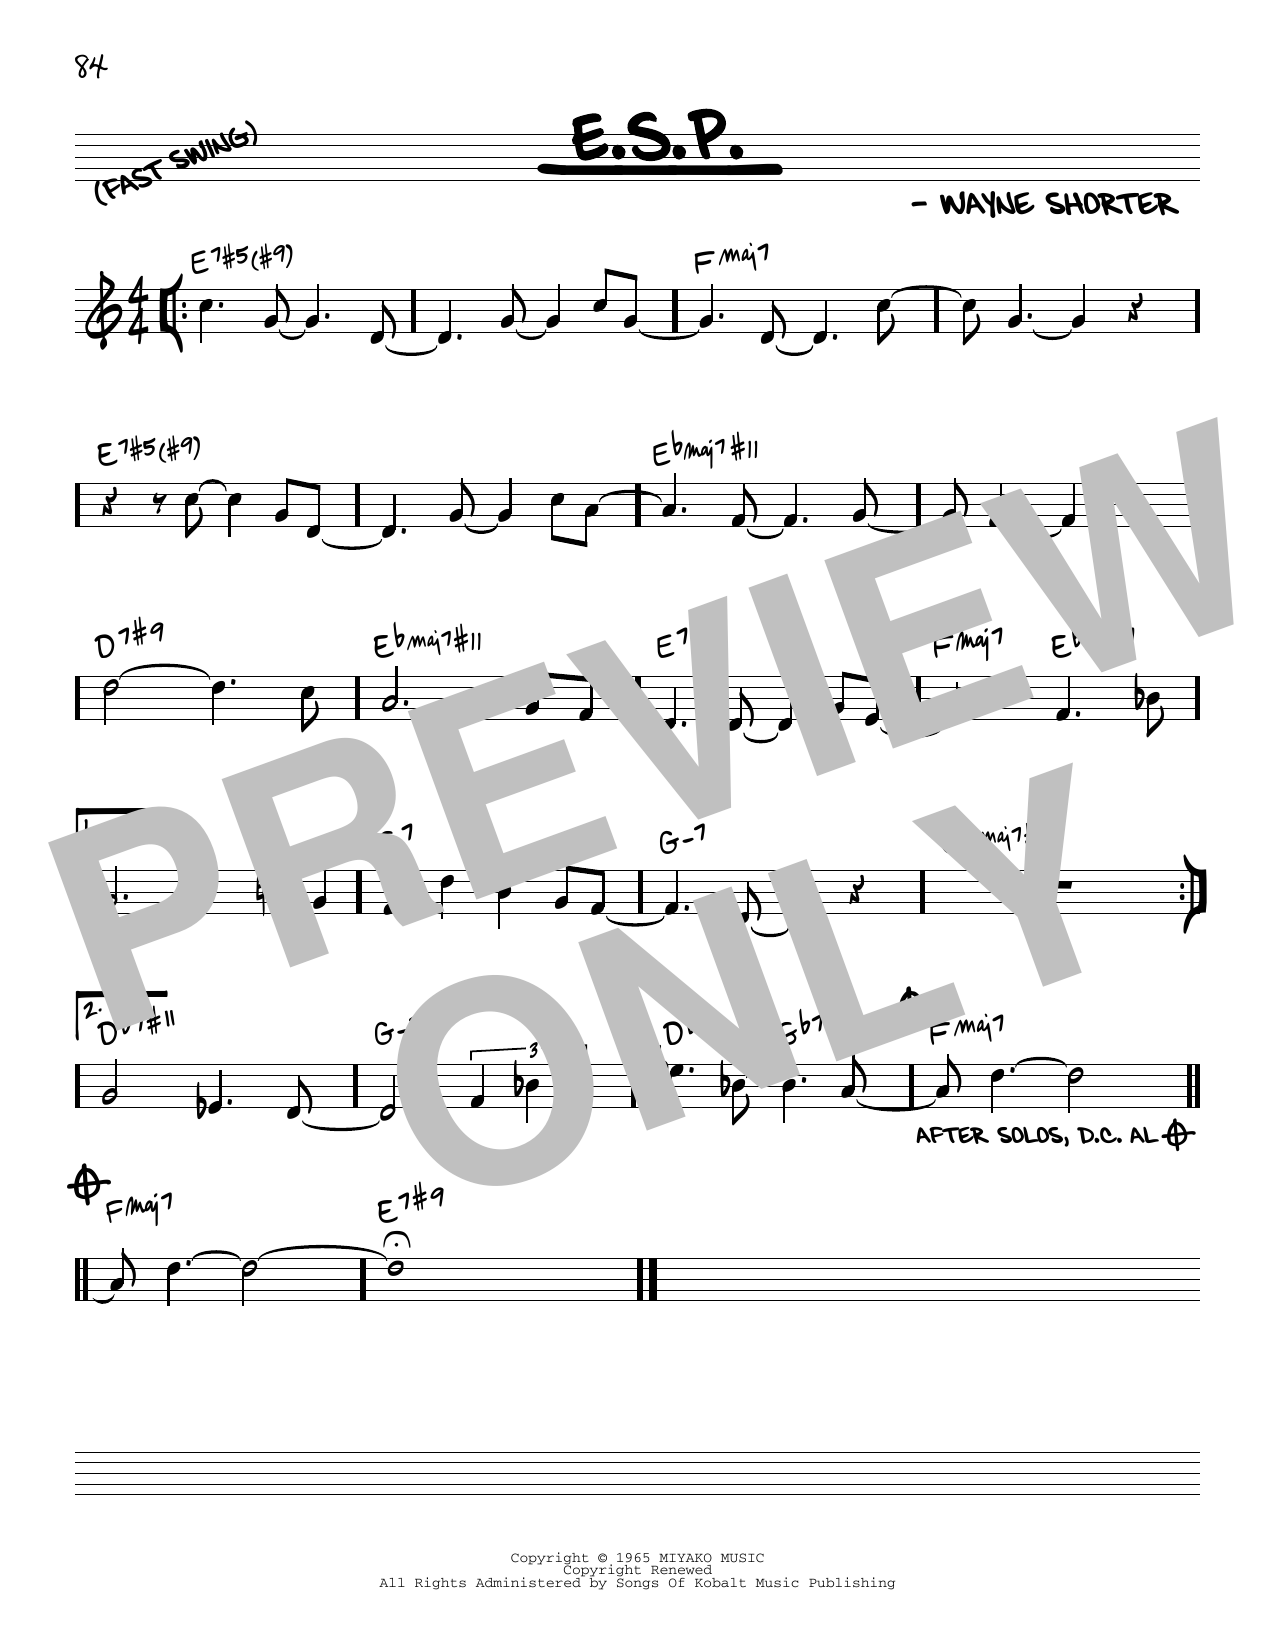 Wayne Shorter E.S.P. Sheet Music Notes & Chords for Real Book - Melody & Chords - Bb Instruments - Download or Print PDF